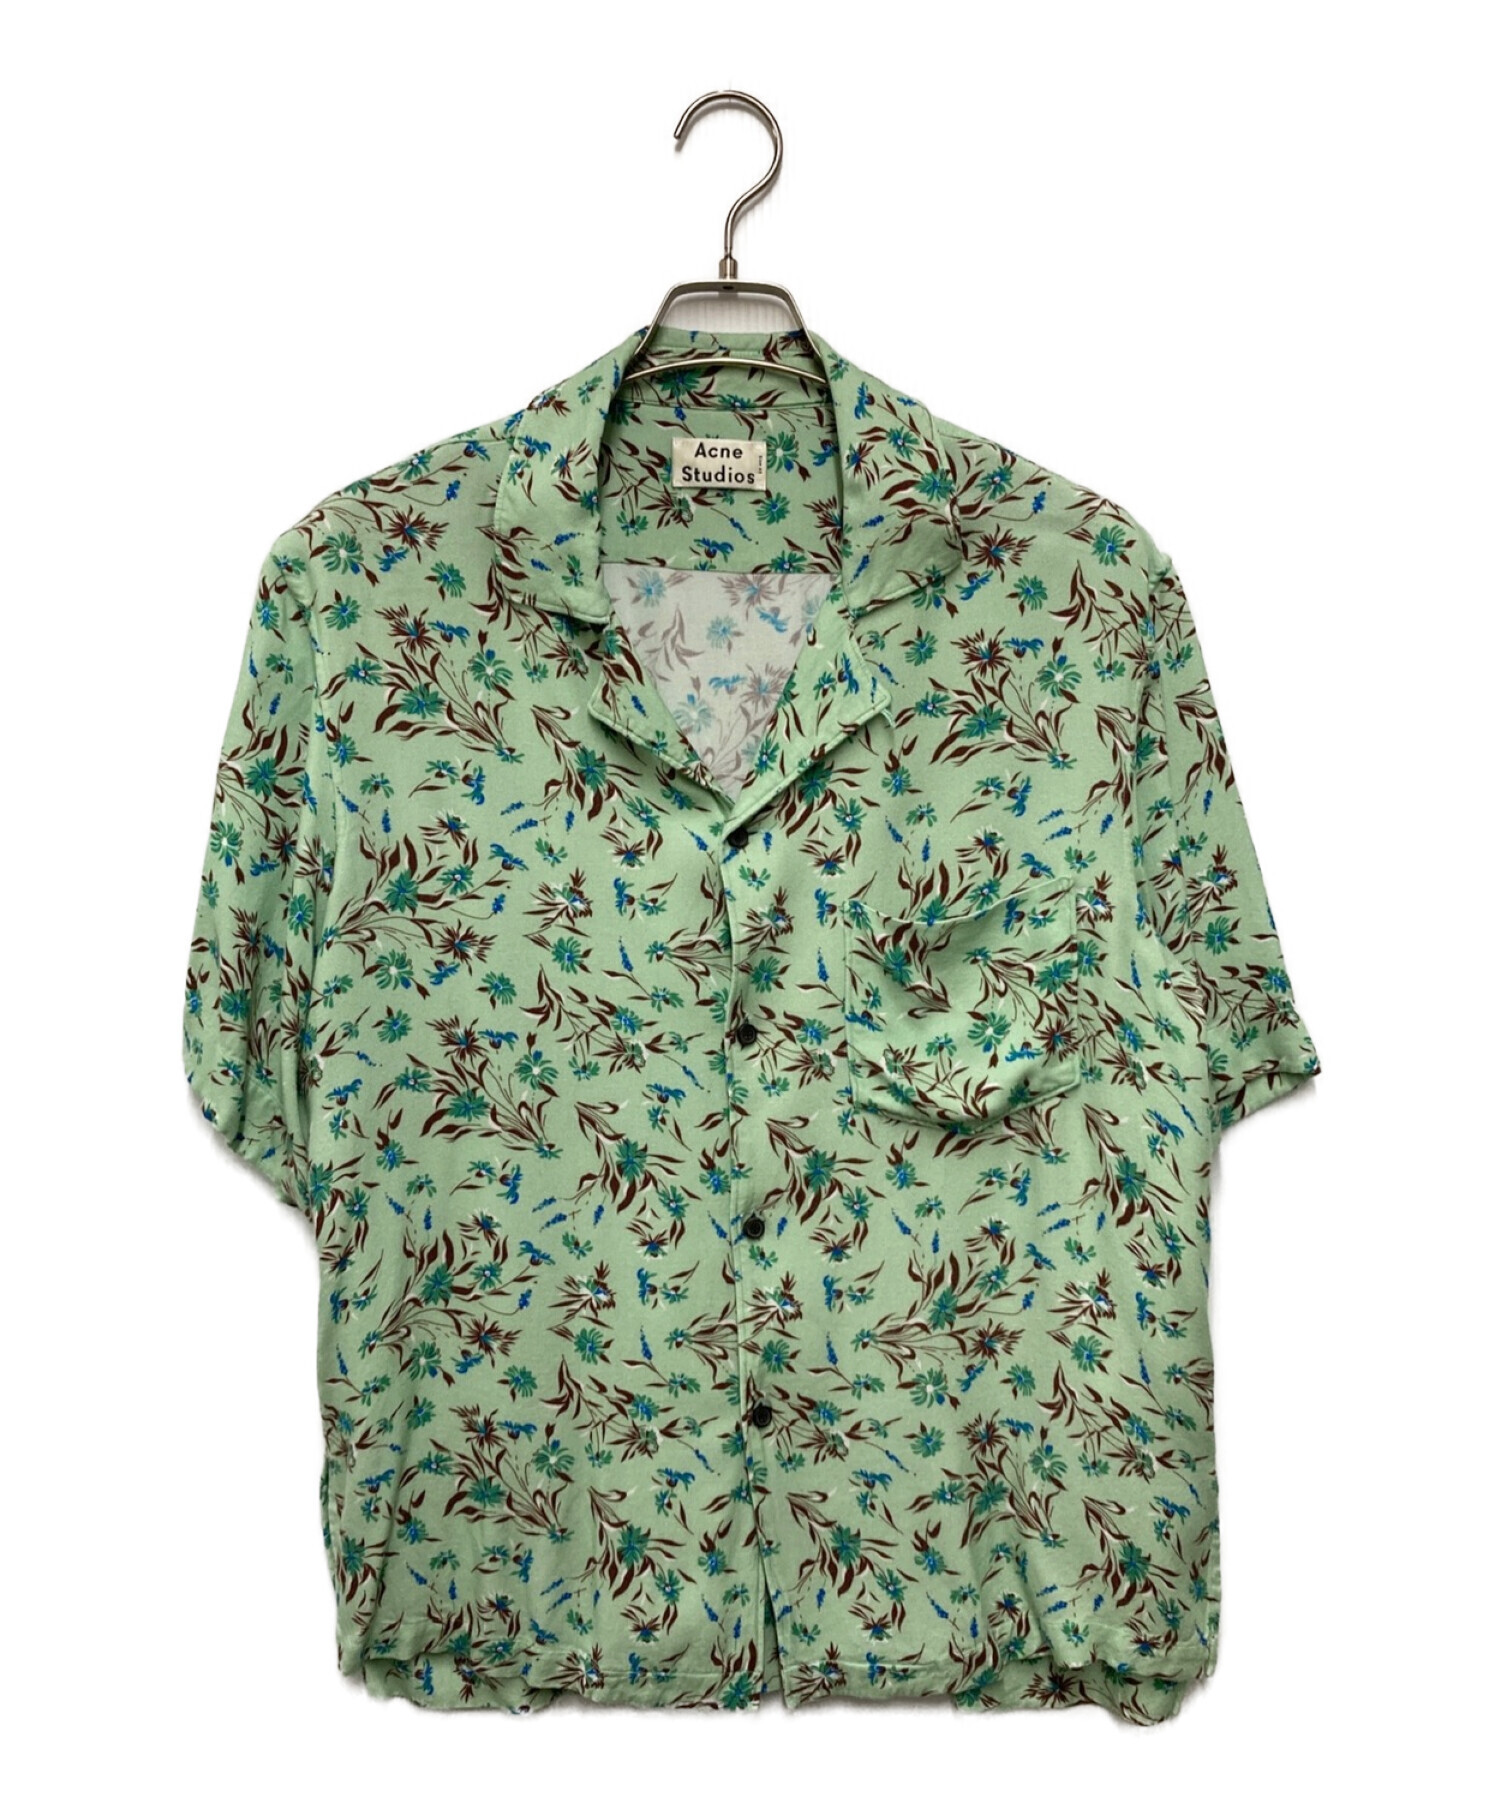 Acne studios (アクネストゥディオズ) flower shirt　フラワーシャツ グリーン サイズ:48